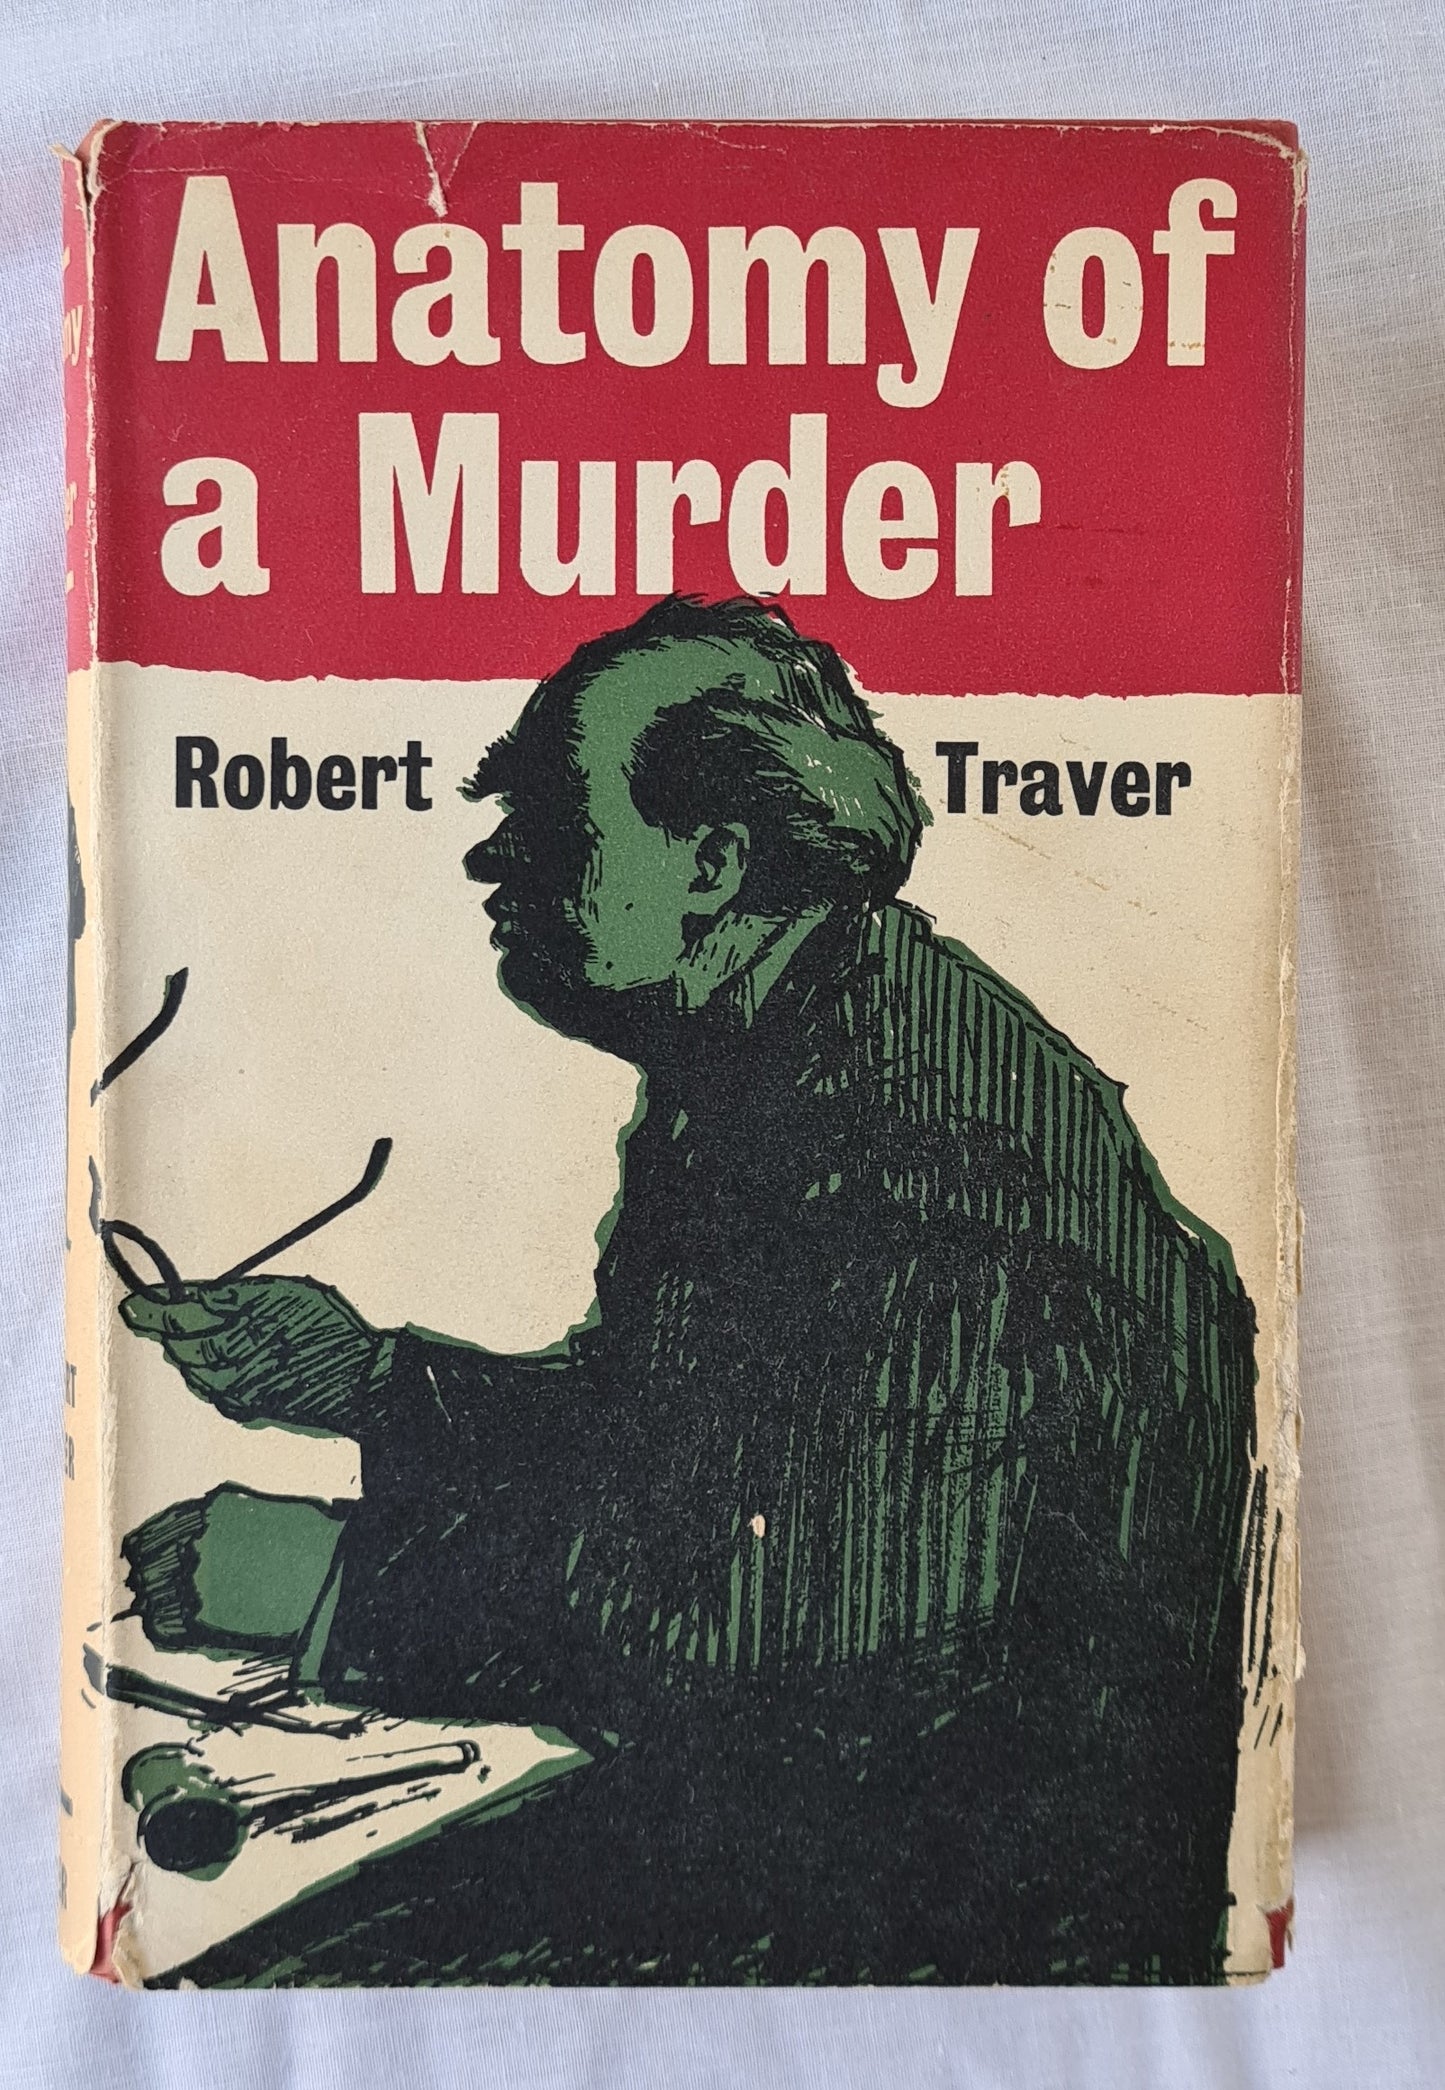 Anatomy of a Murder  by Robert Traver